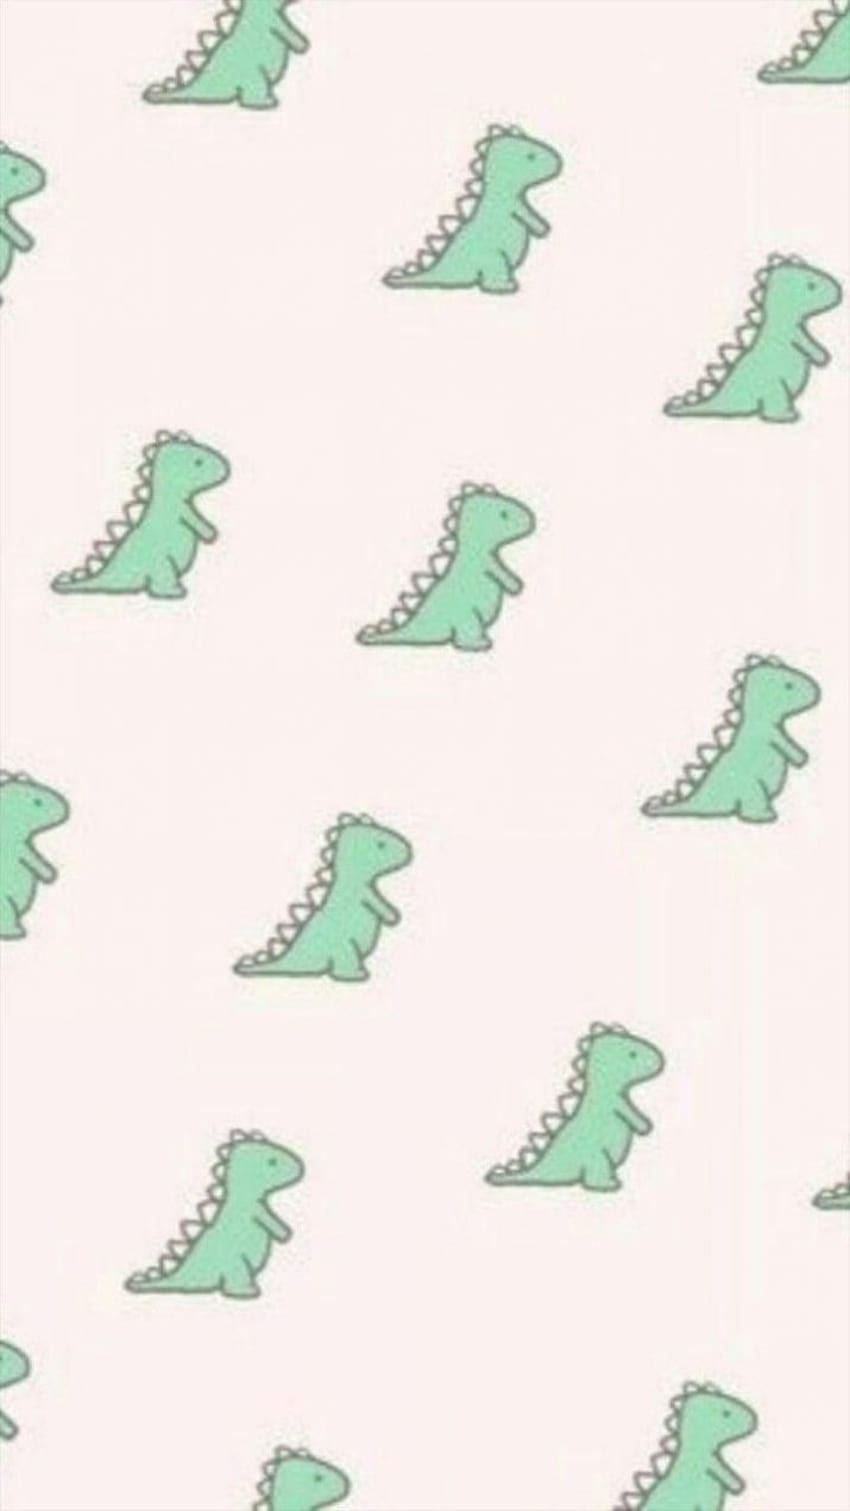 21 Matching pfp ideas  cute cartoon wallpapers dinosaur wallpaper  cartoon wallpaper